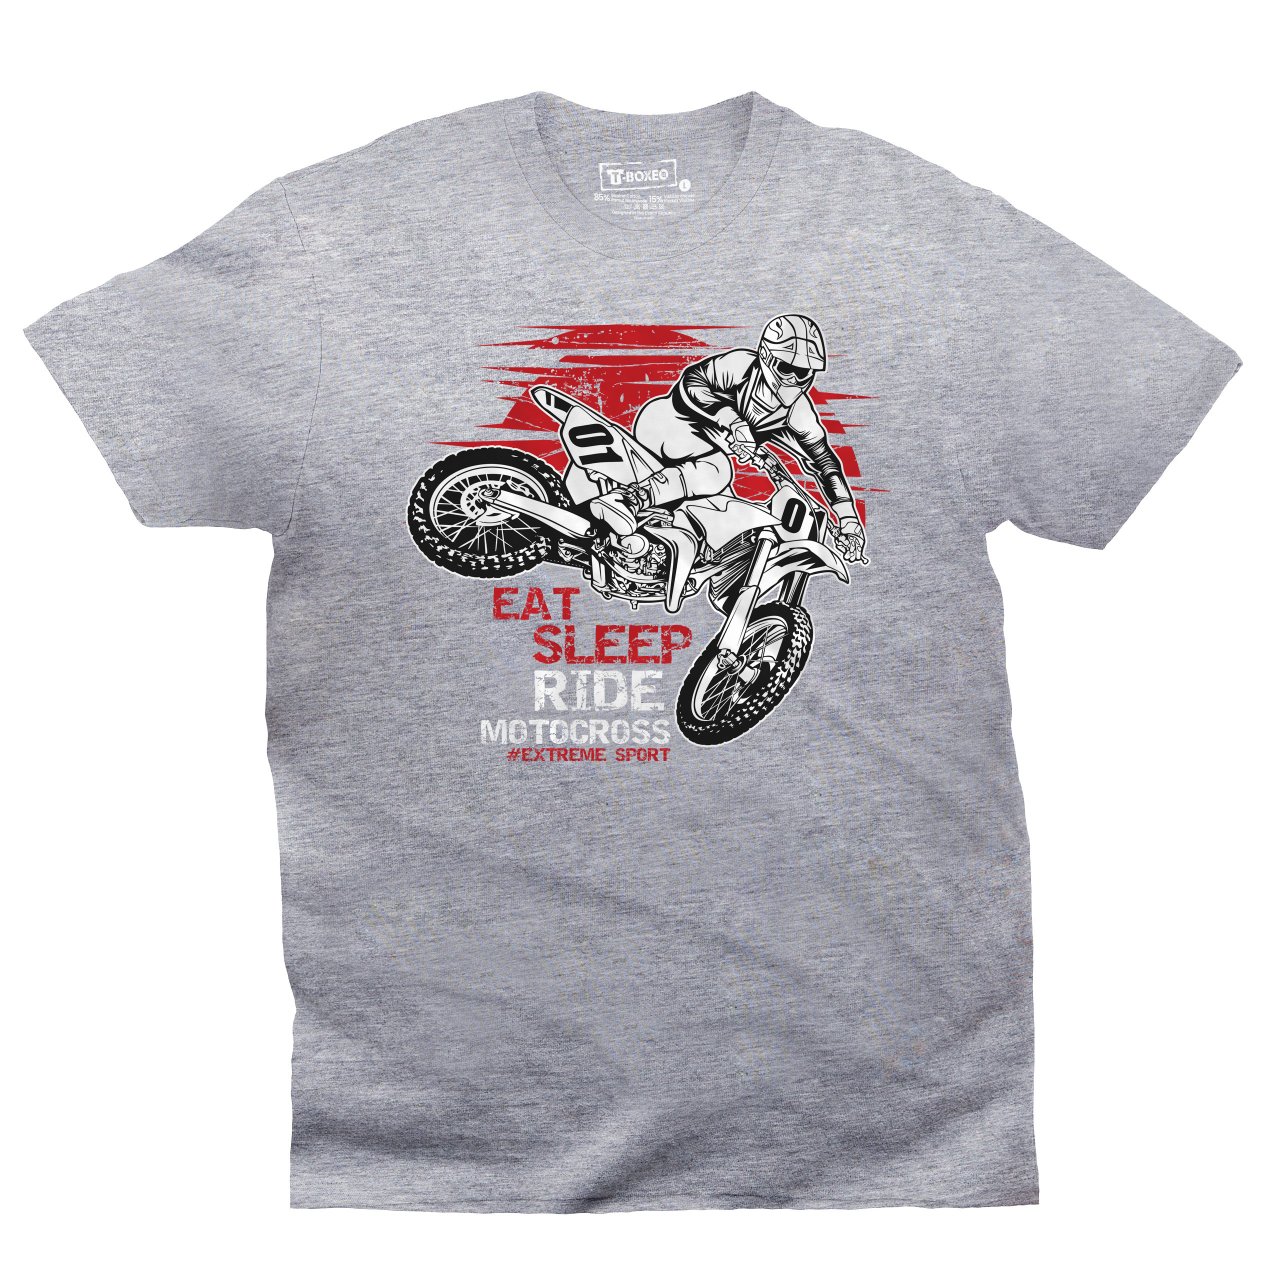 Pánské tričko s potiskem “Eat, Sleep, Ride Motocross"